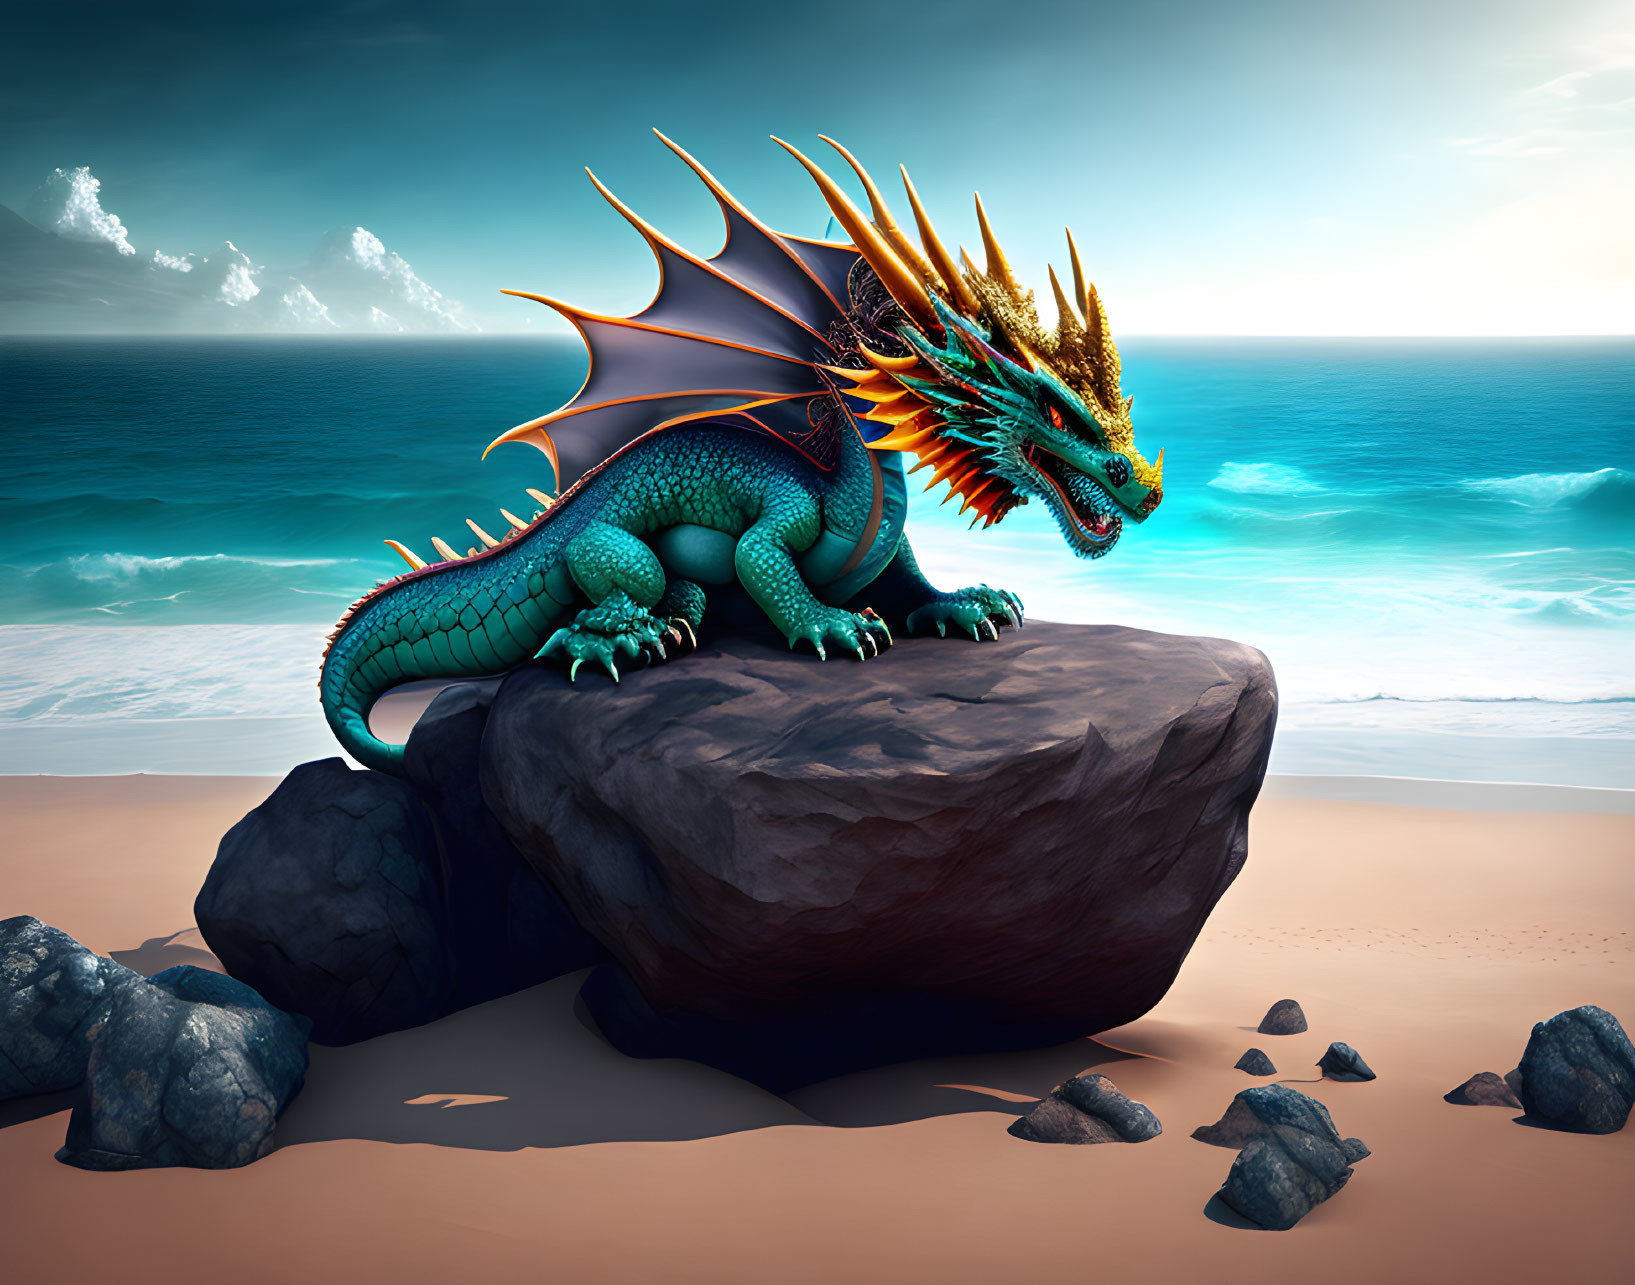  Blue dragon over the ocean